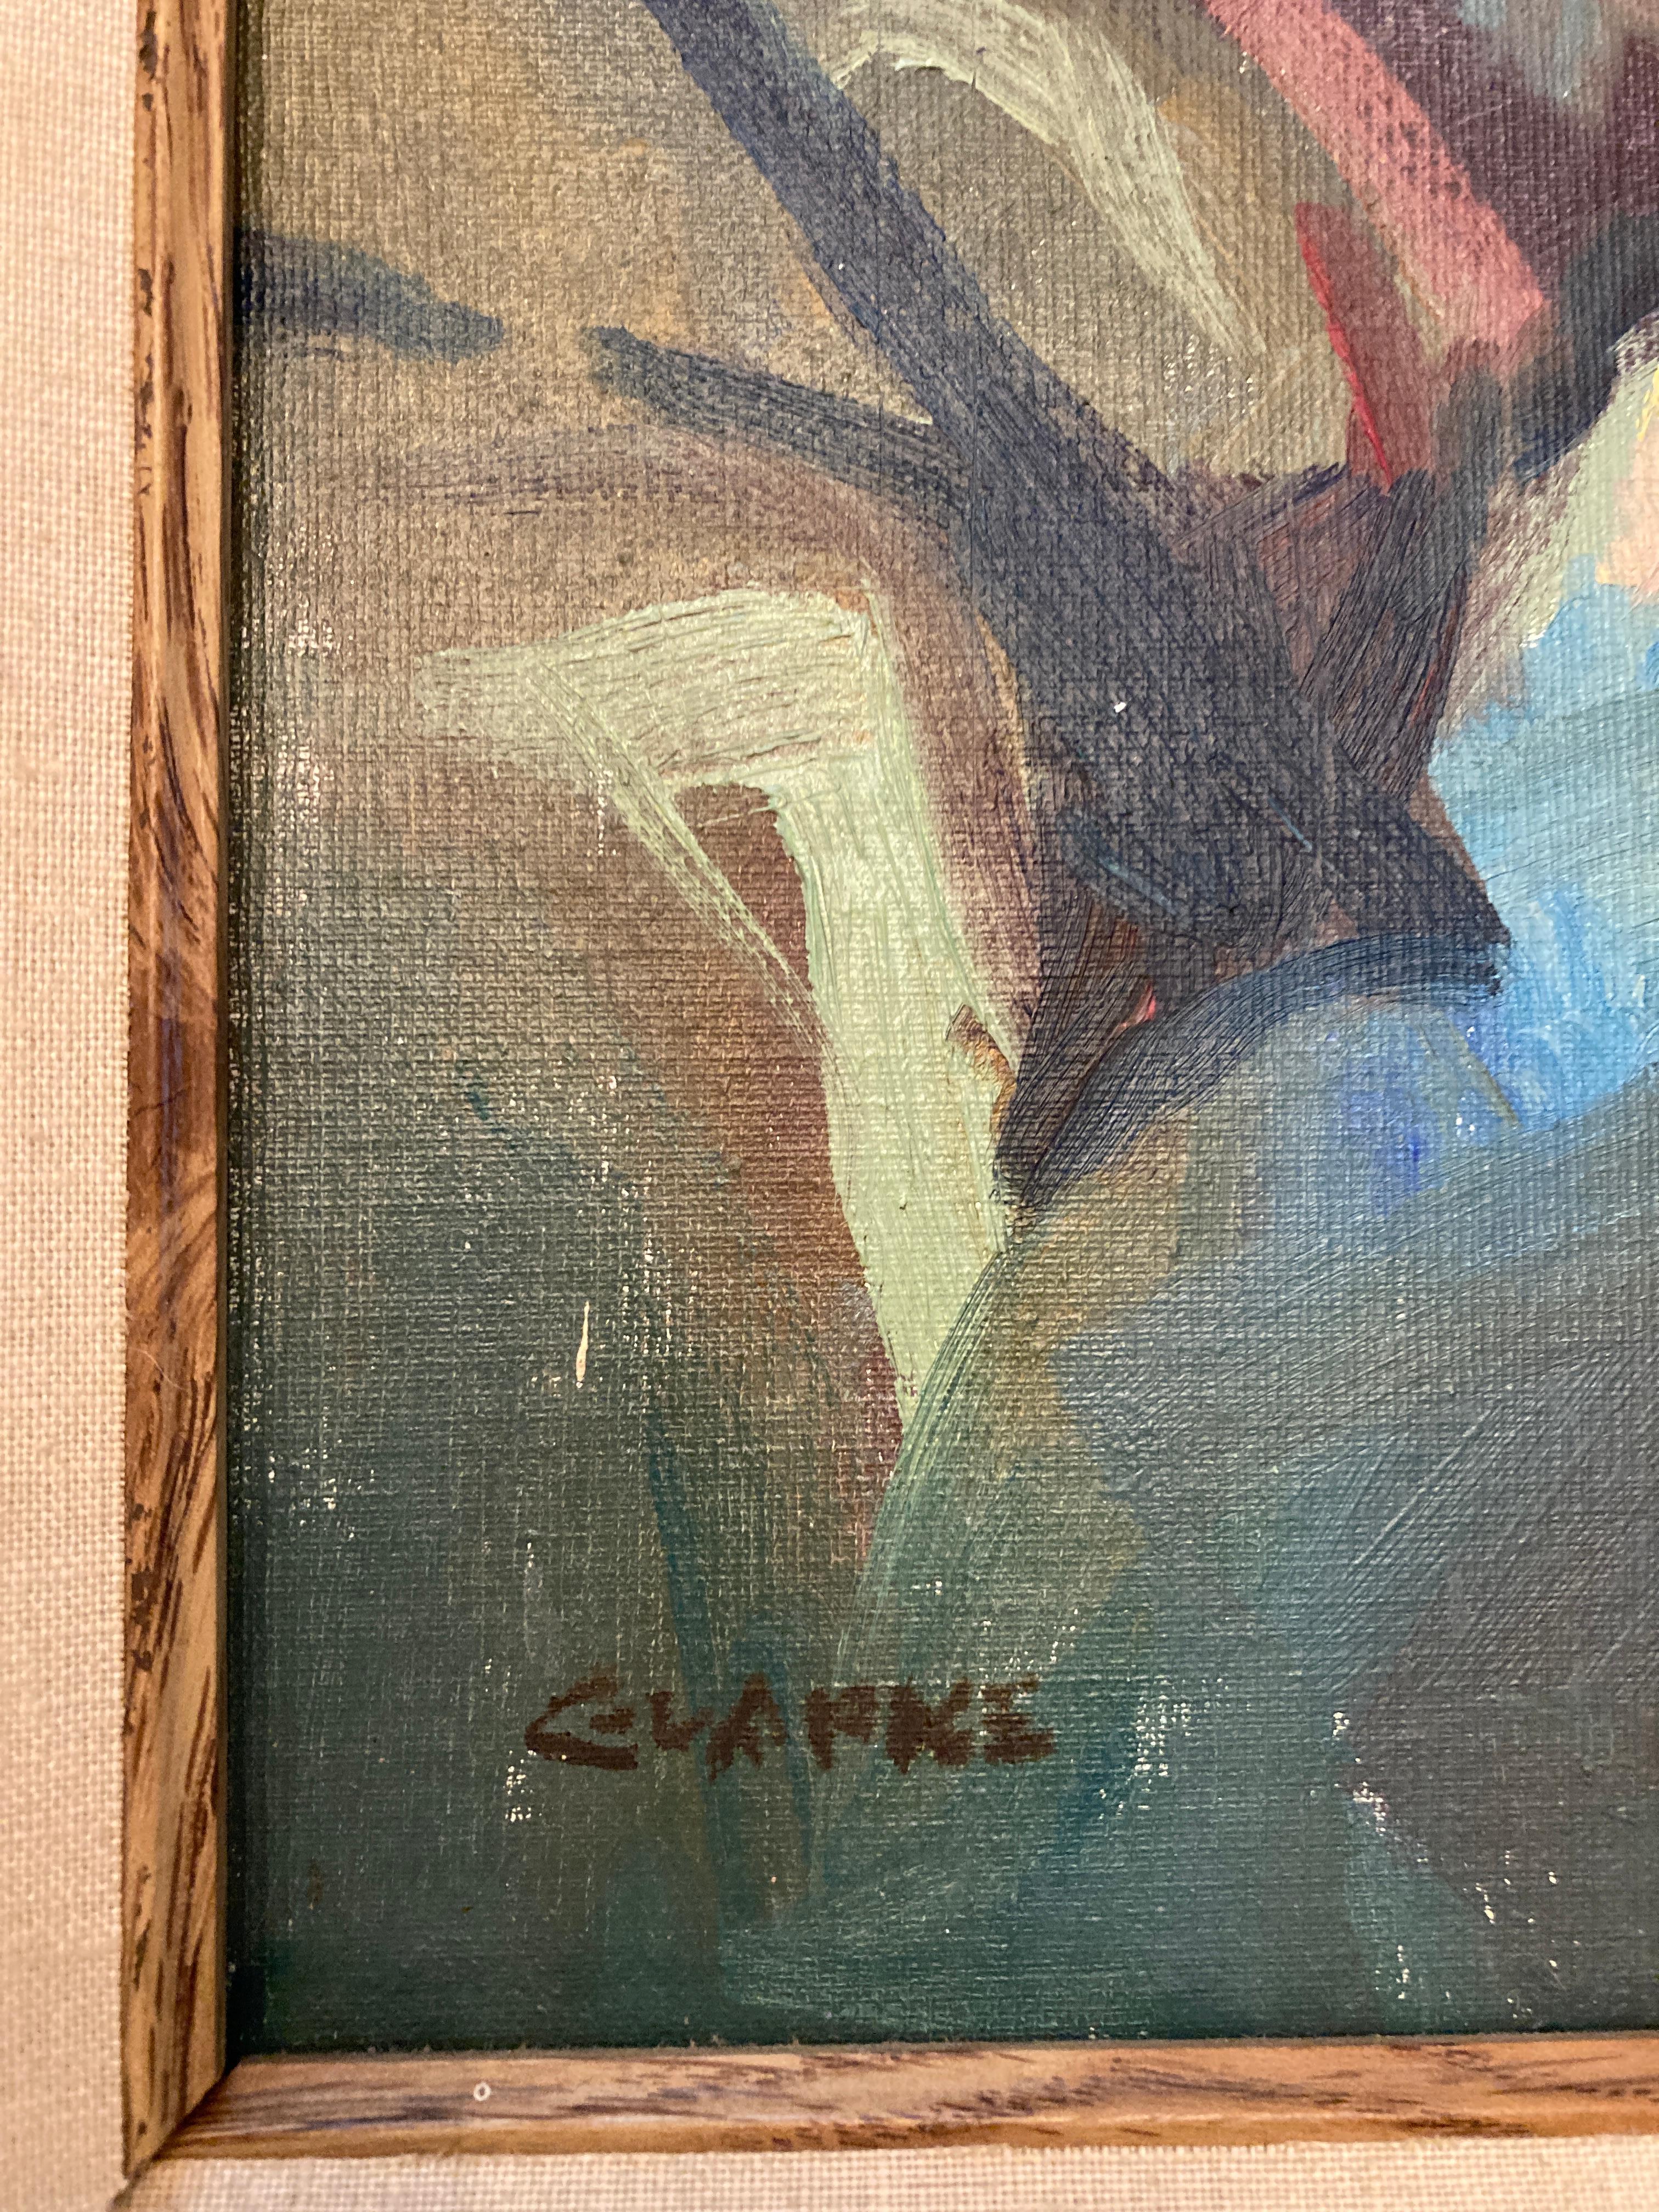 Edward Glafke 'Point Lobos' Carmel Impressionist Seascape Painting For Sale 4